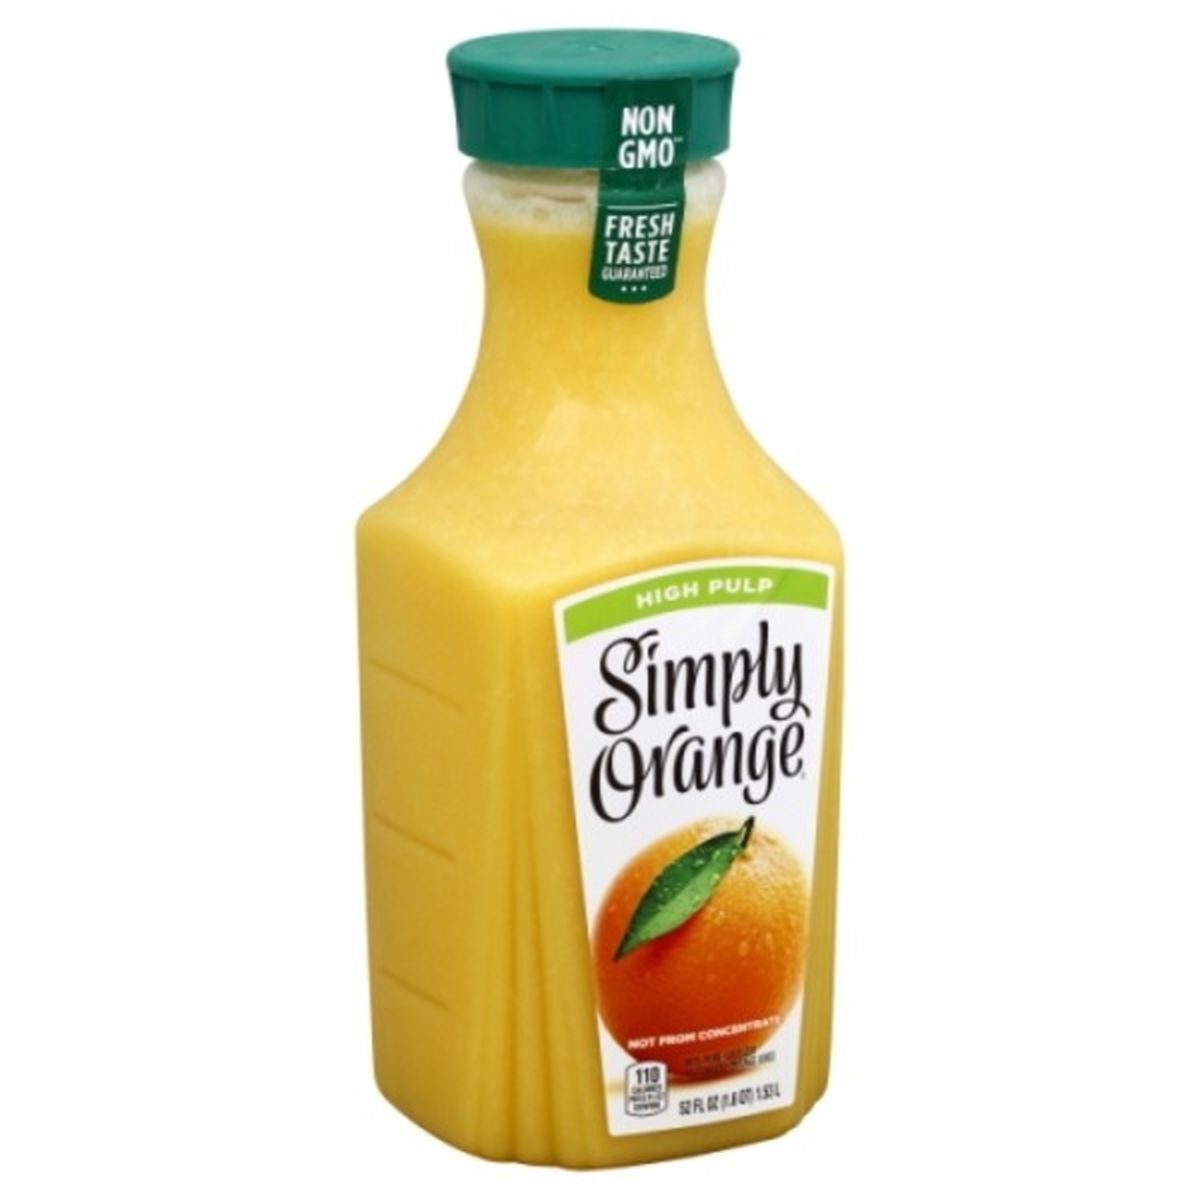 Calories in Simply Orange Juice, High Pulp